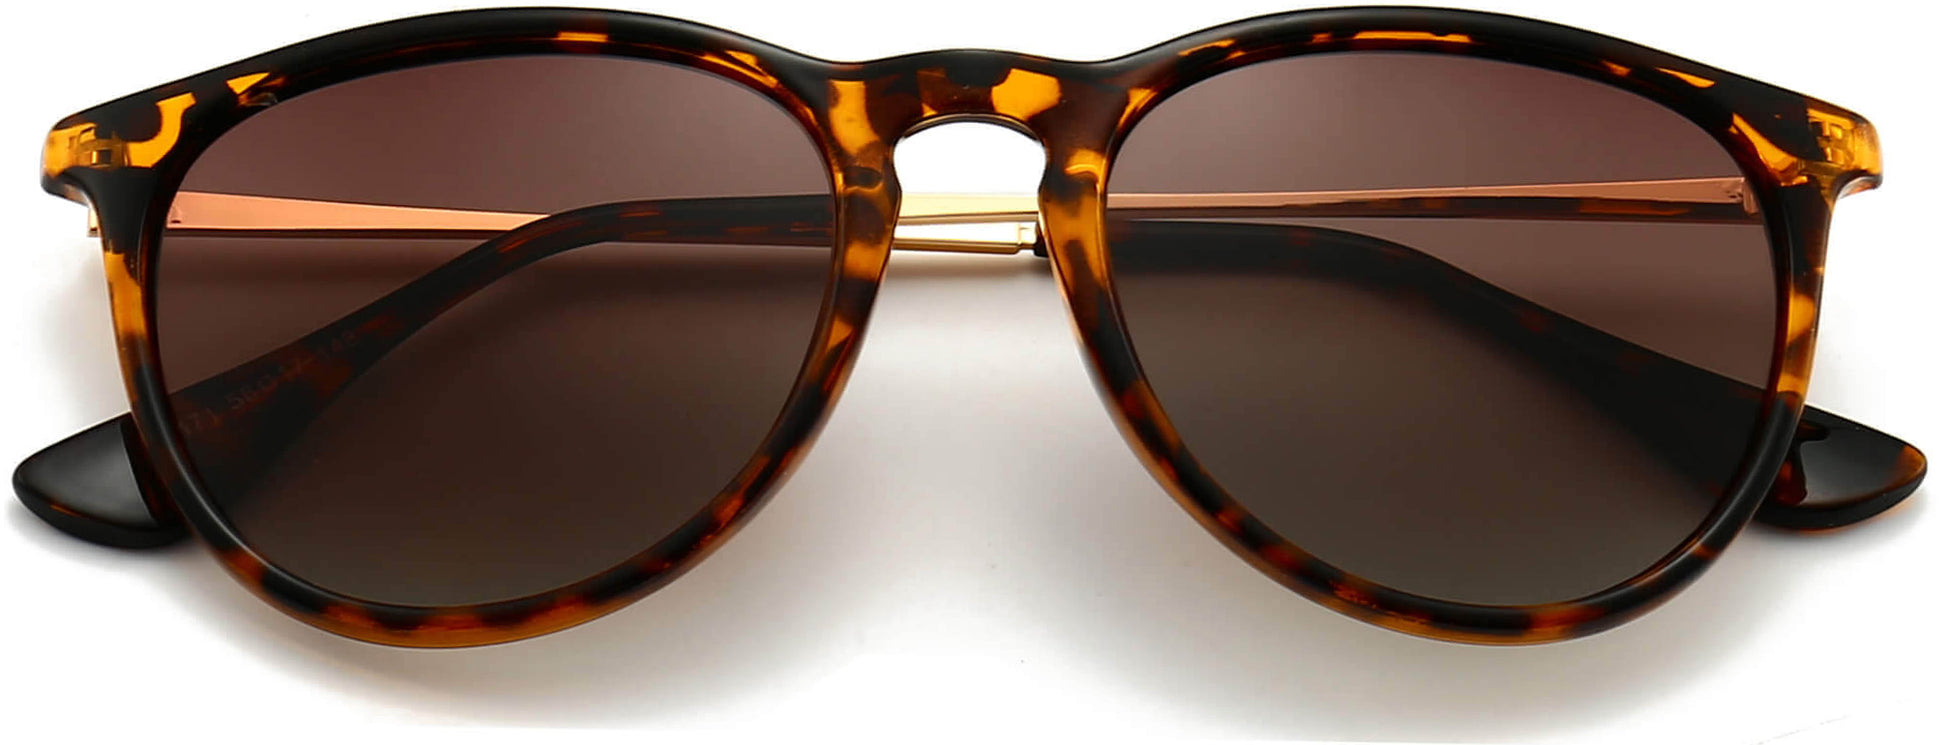 Maddox Tortoise Plastic Sunglasses from ANRRI, closed view